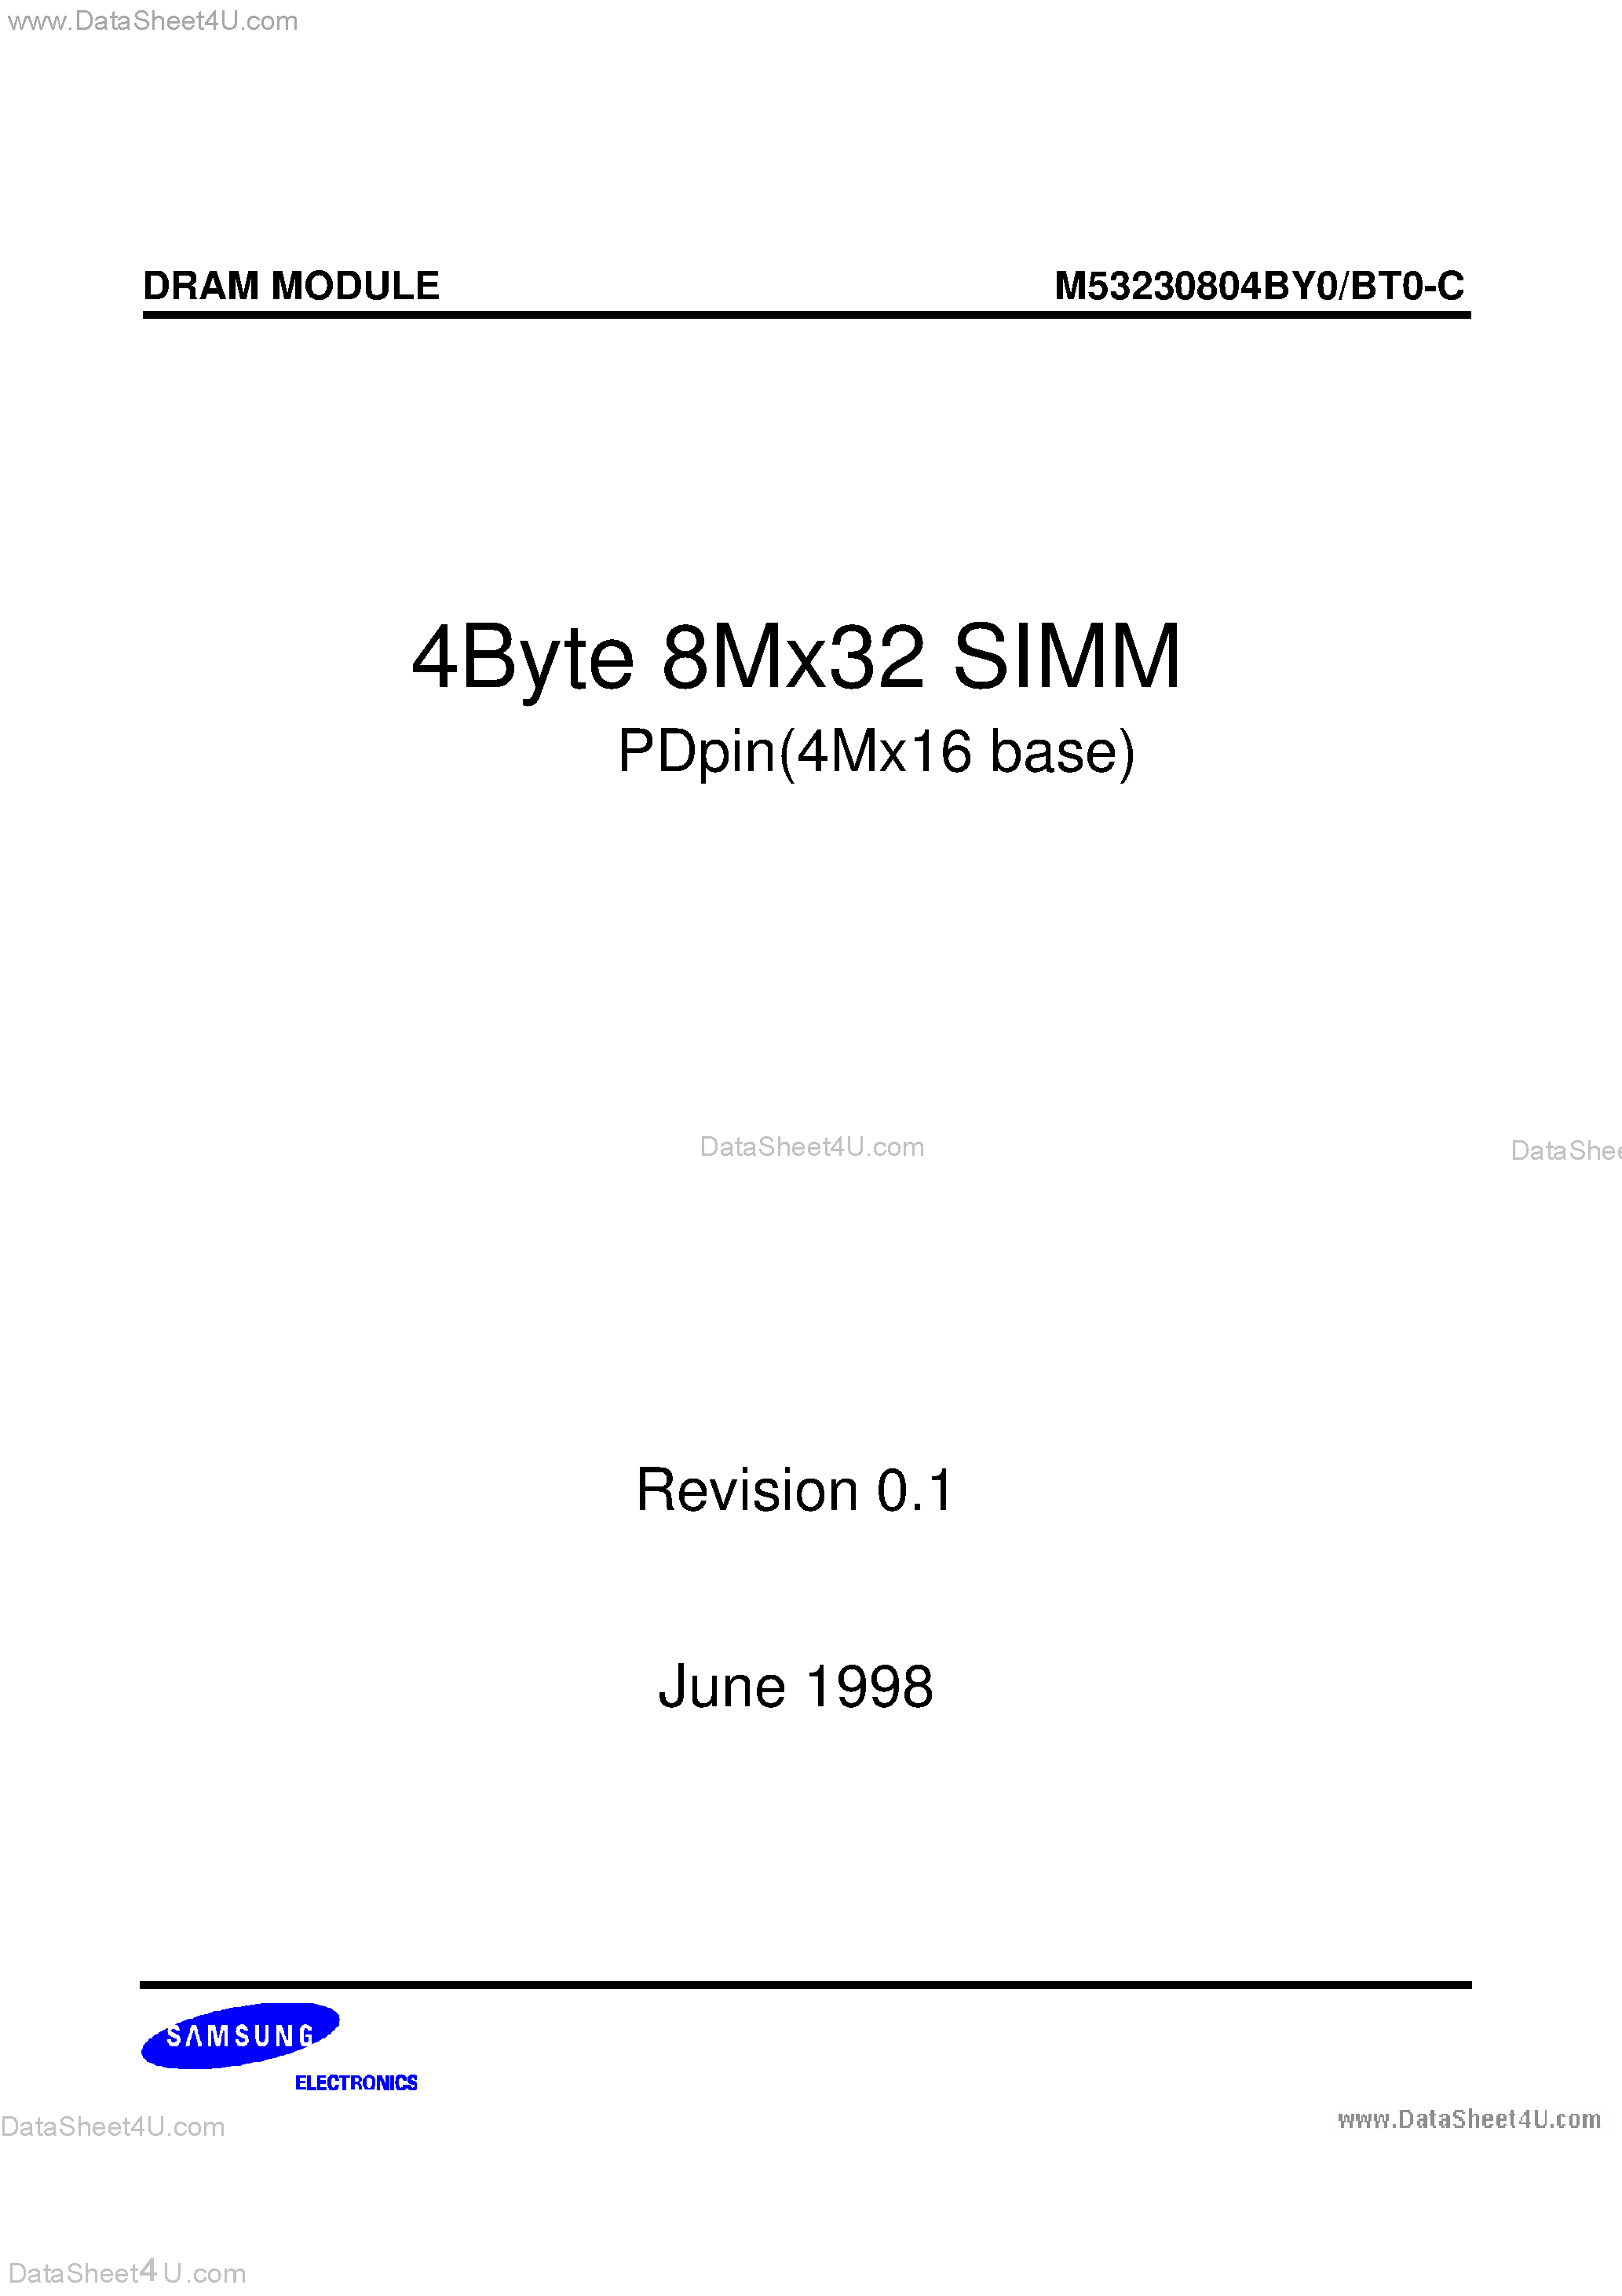 Даташит M53230804BT0-C - (M53230804BT0-C/BY0) DRAM Module страница 1